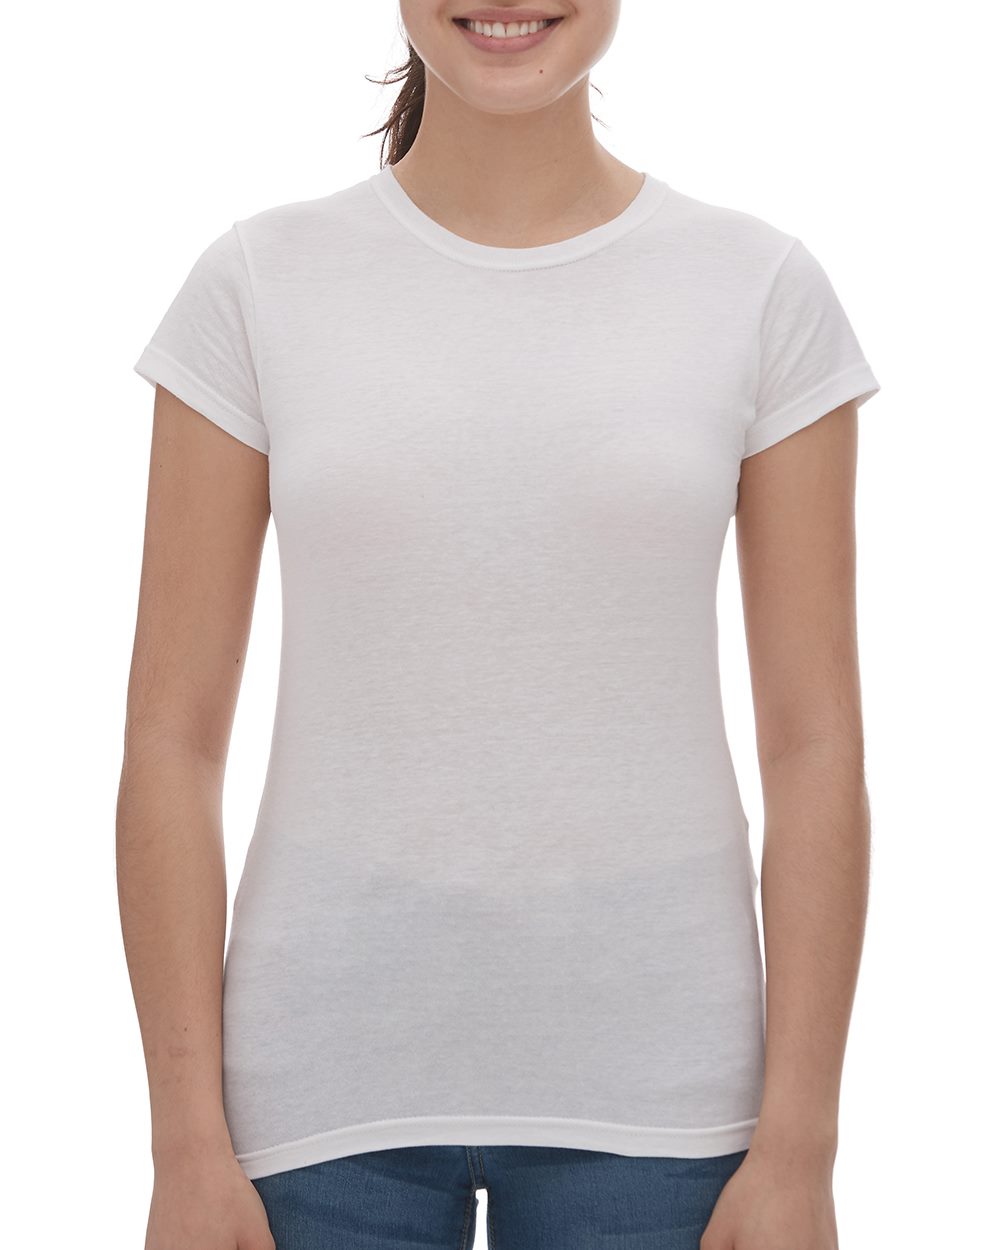 M&O Fine Jersey T-Shirt - Men's - White - Screen